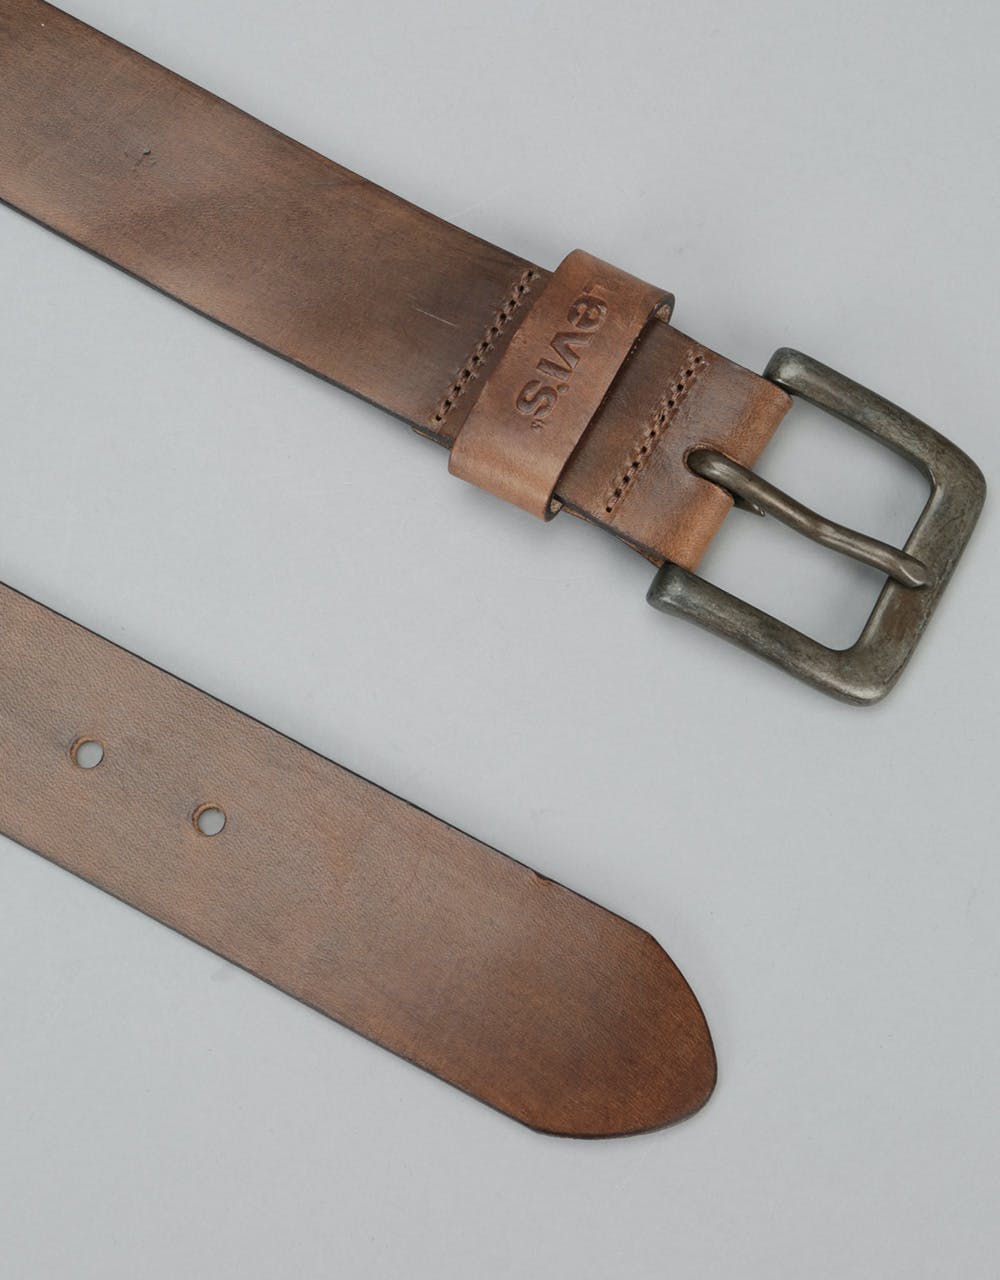 Levis Stinson Leather Belt - Medium Brown